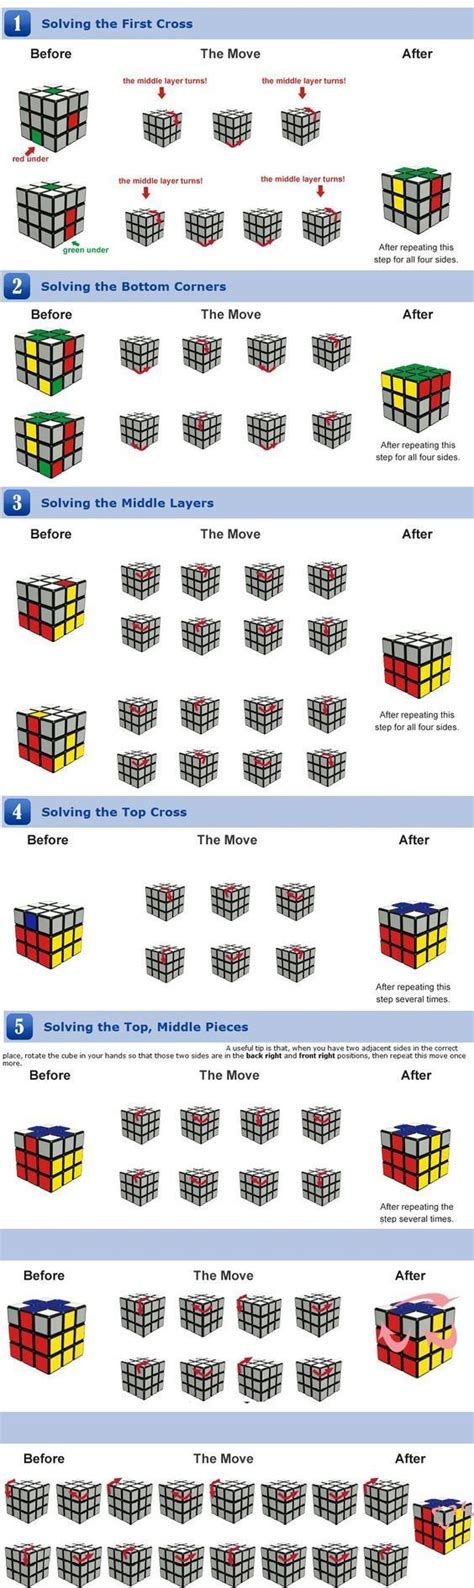 imgurcom  life hacks rubix cube cube